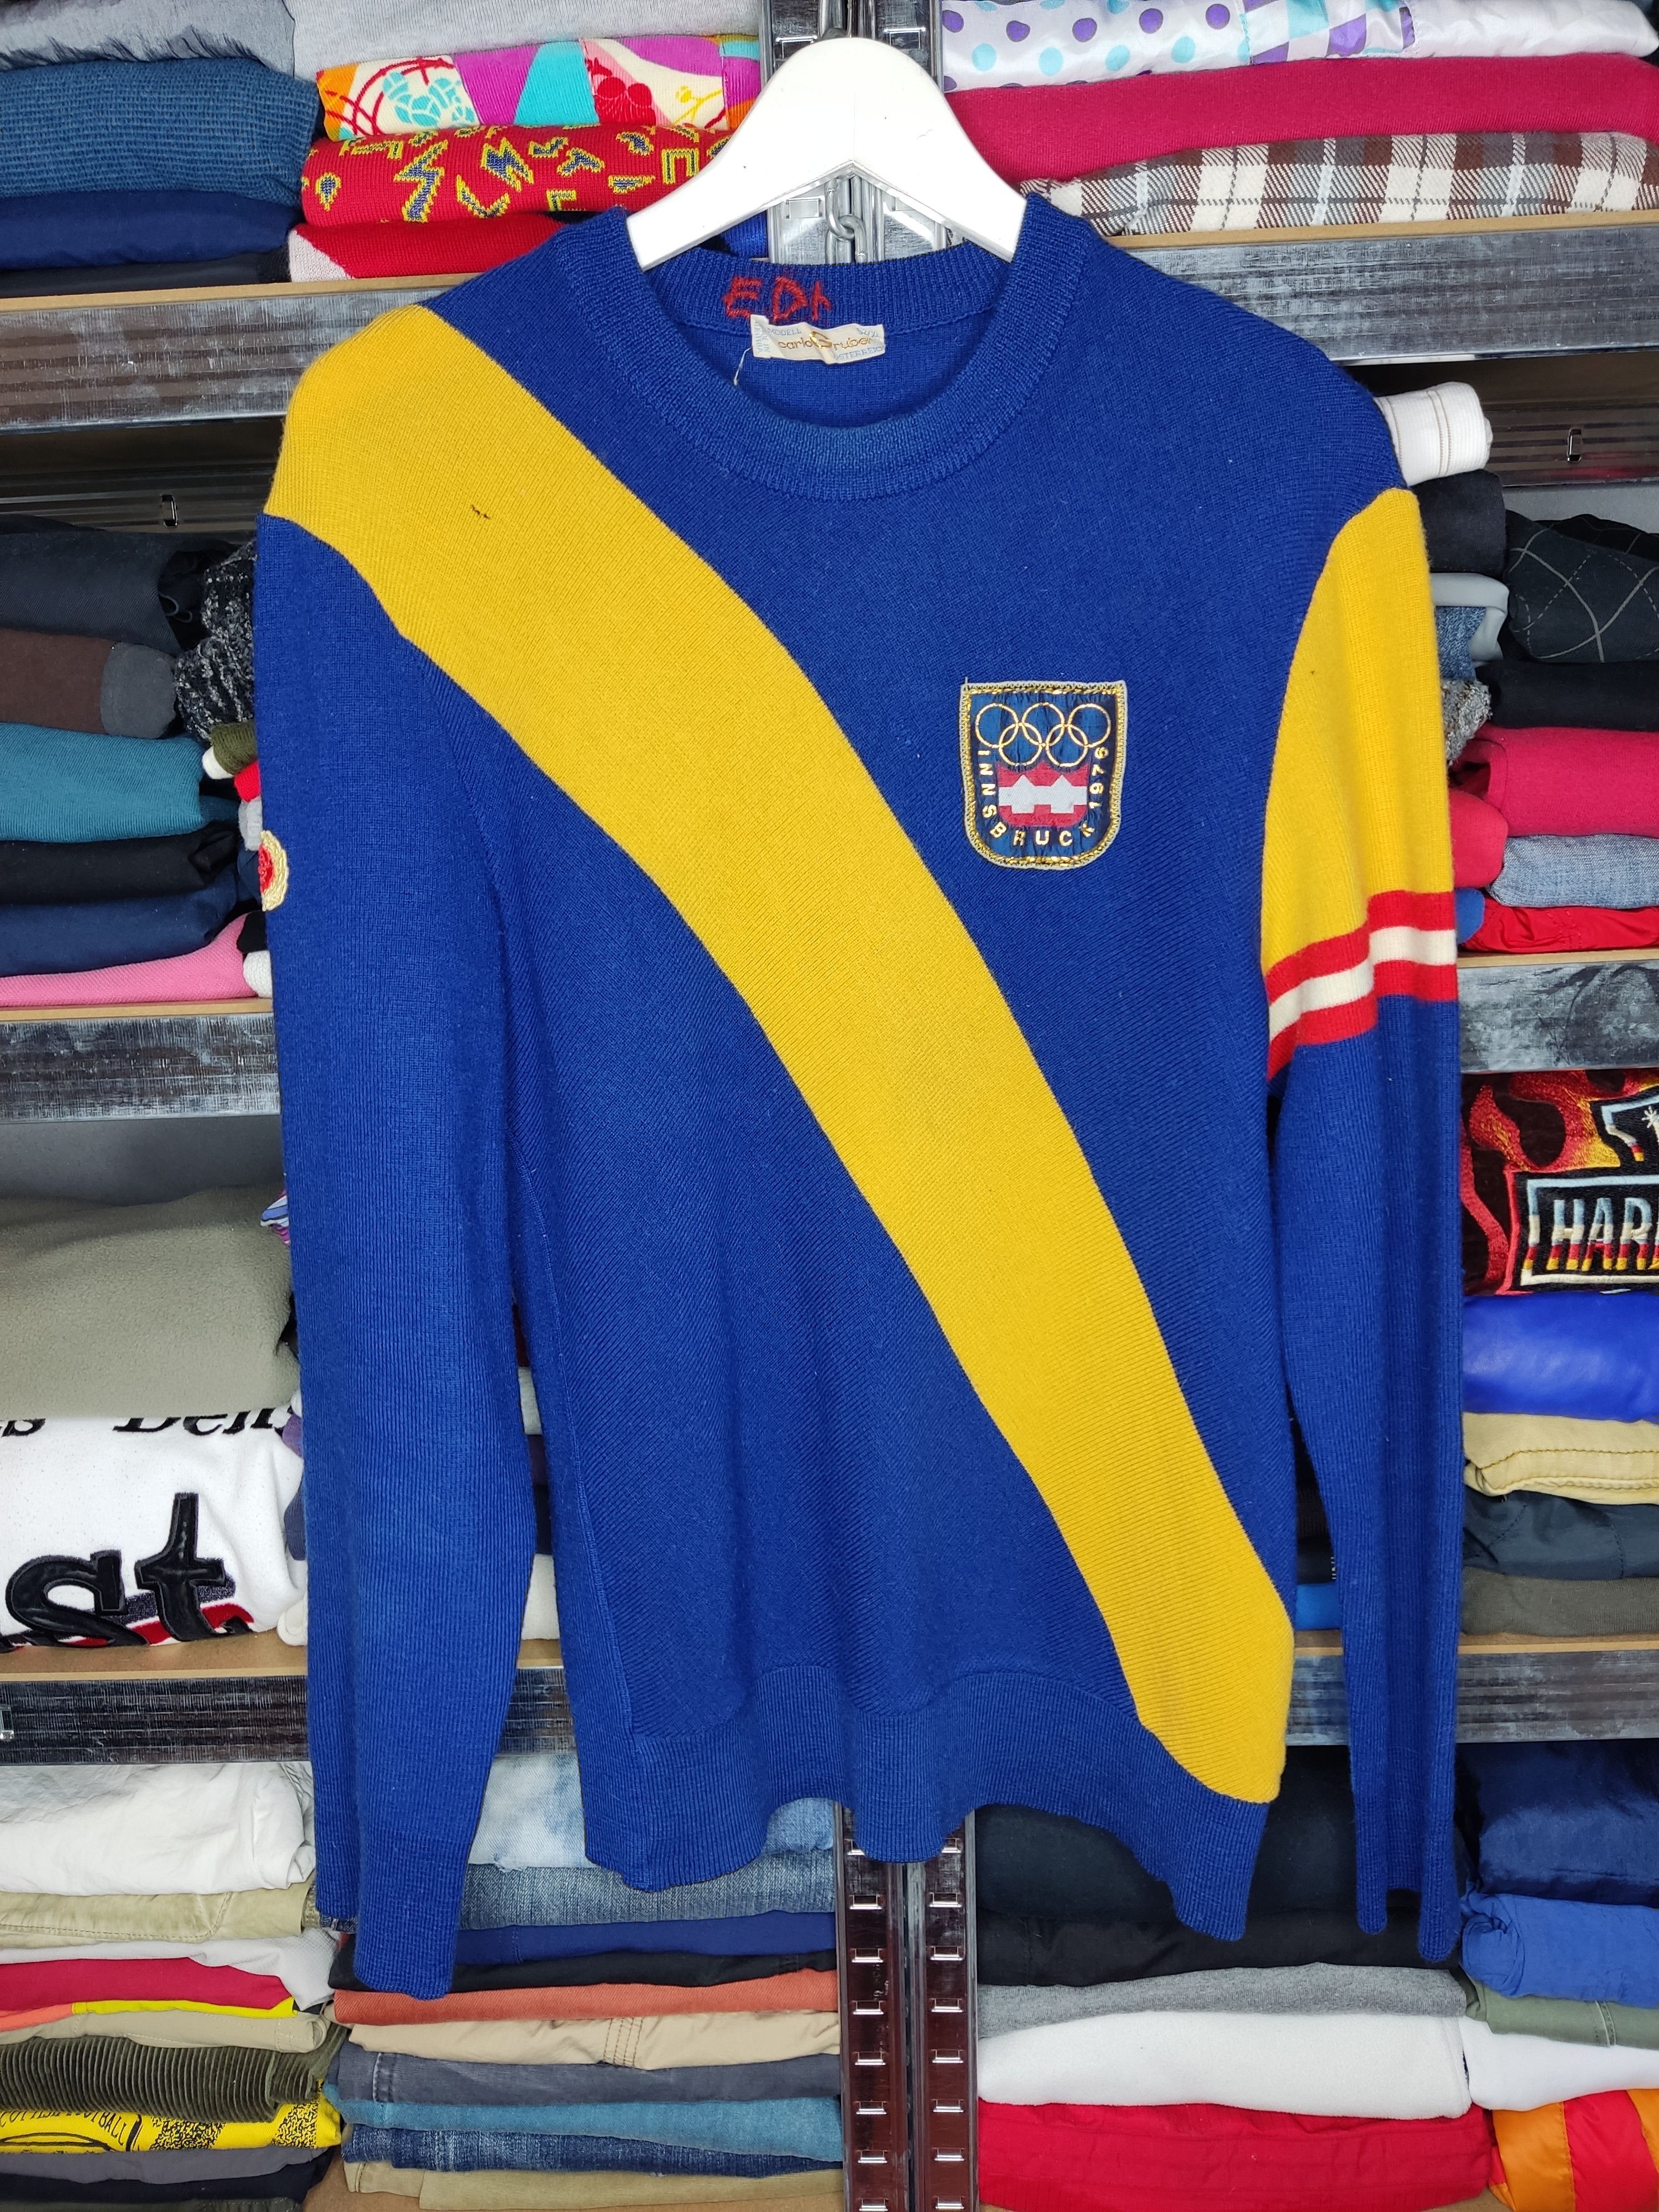 Vintage Innsbruck Austria 1976 Olympics Games Knit Sweater Size US L / EU 52-54 / 3 - 1 Preview